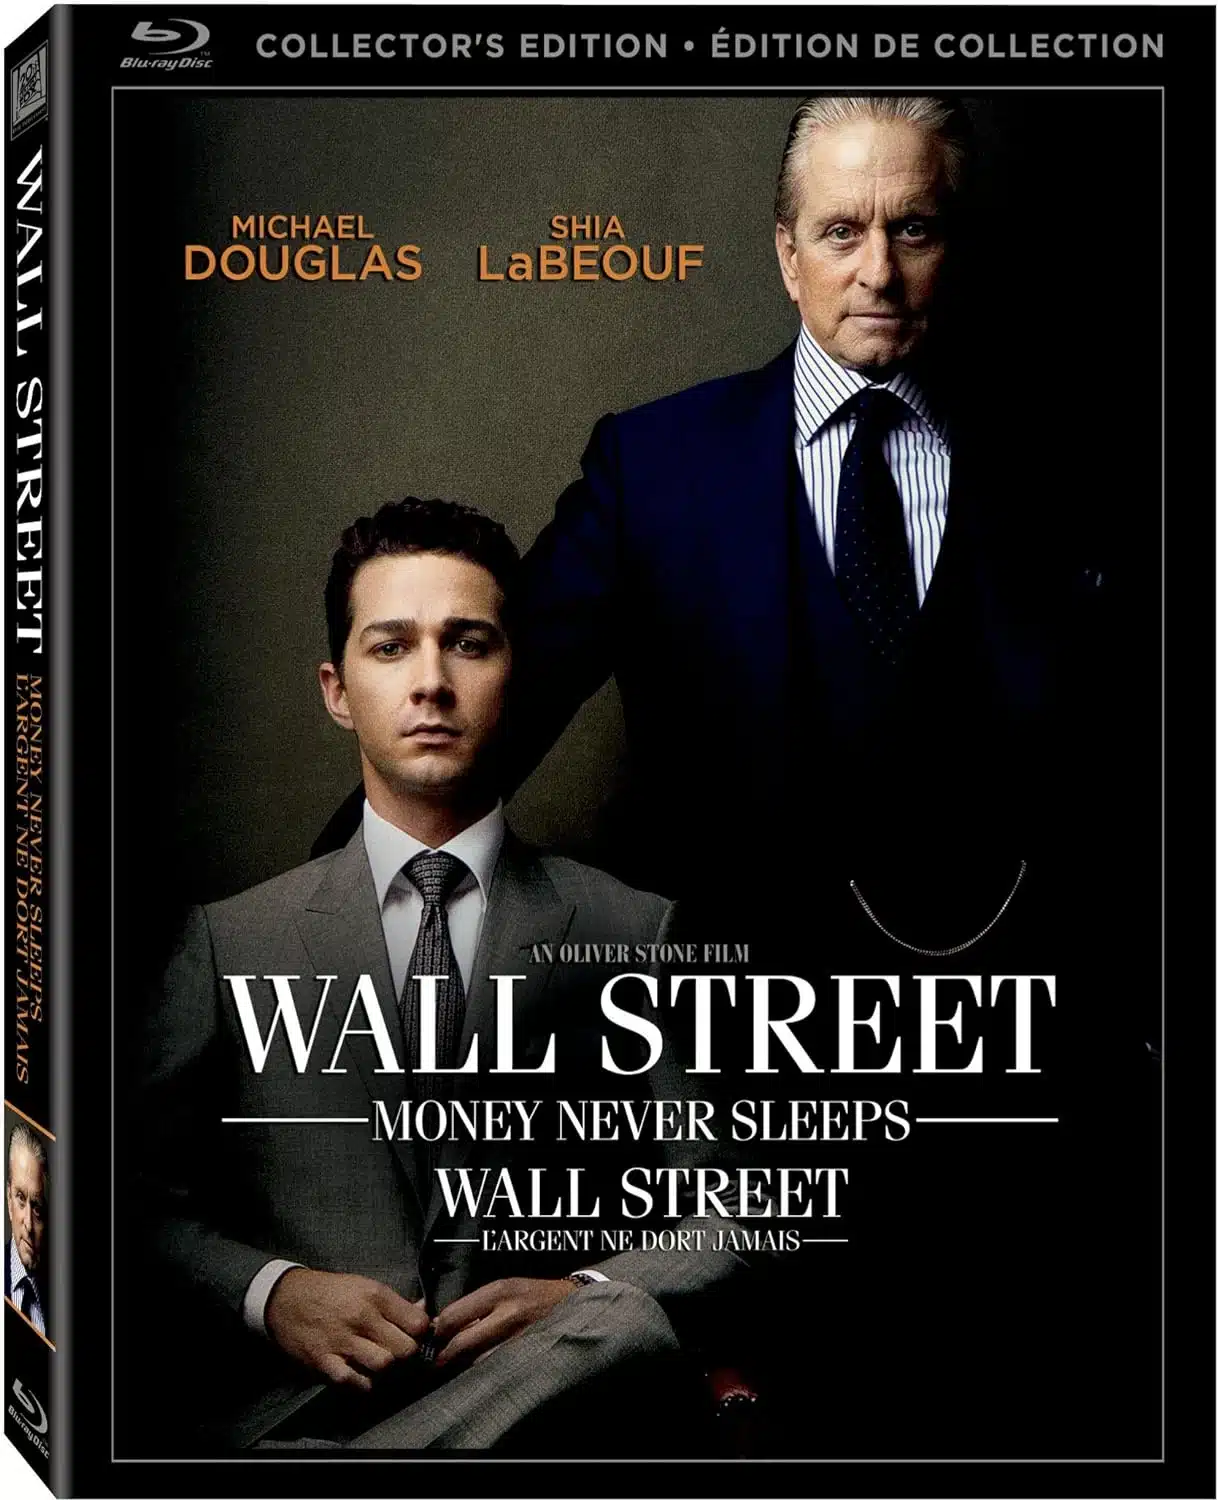 Wall Street: Money Never Sleeps blu ray cover